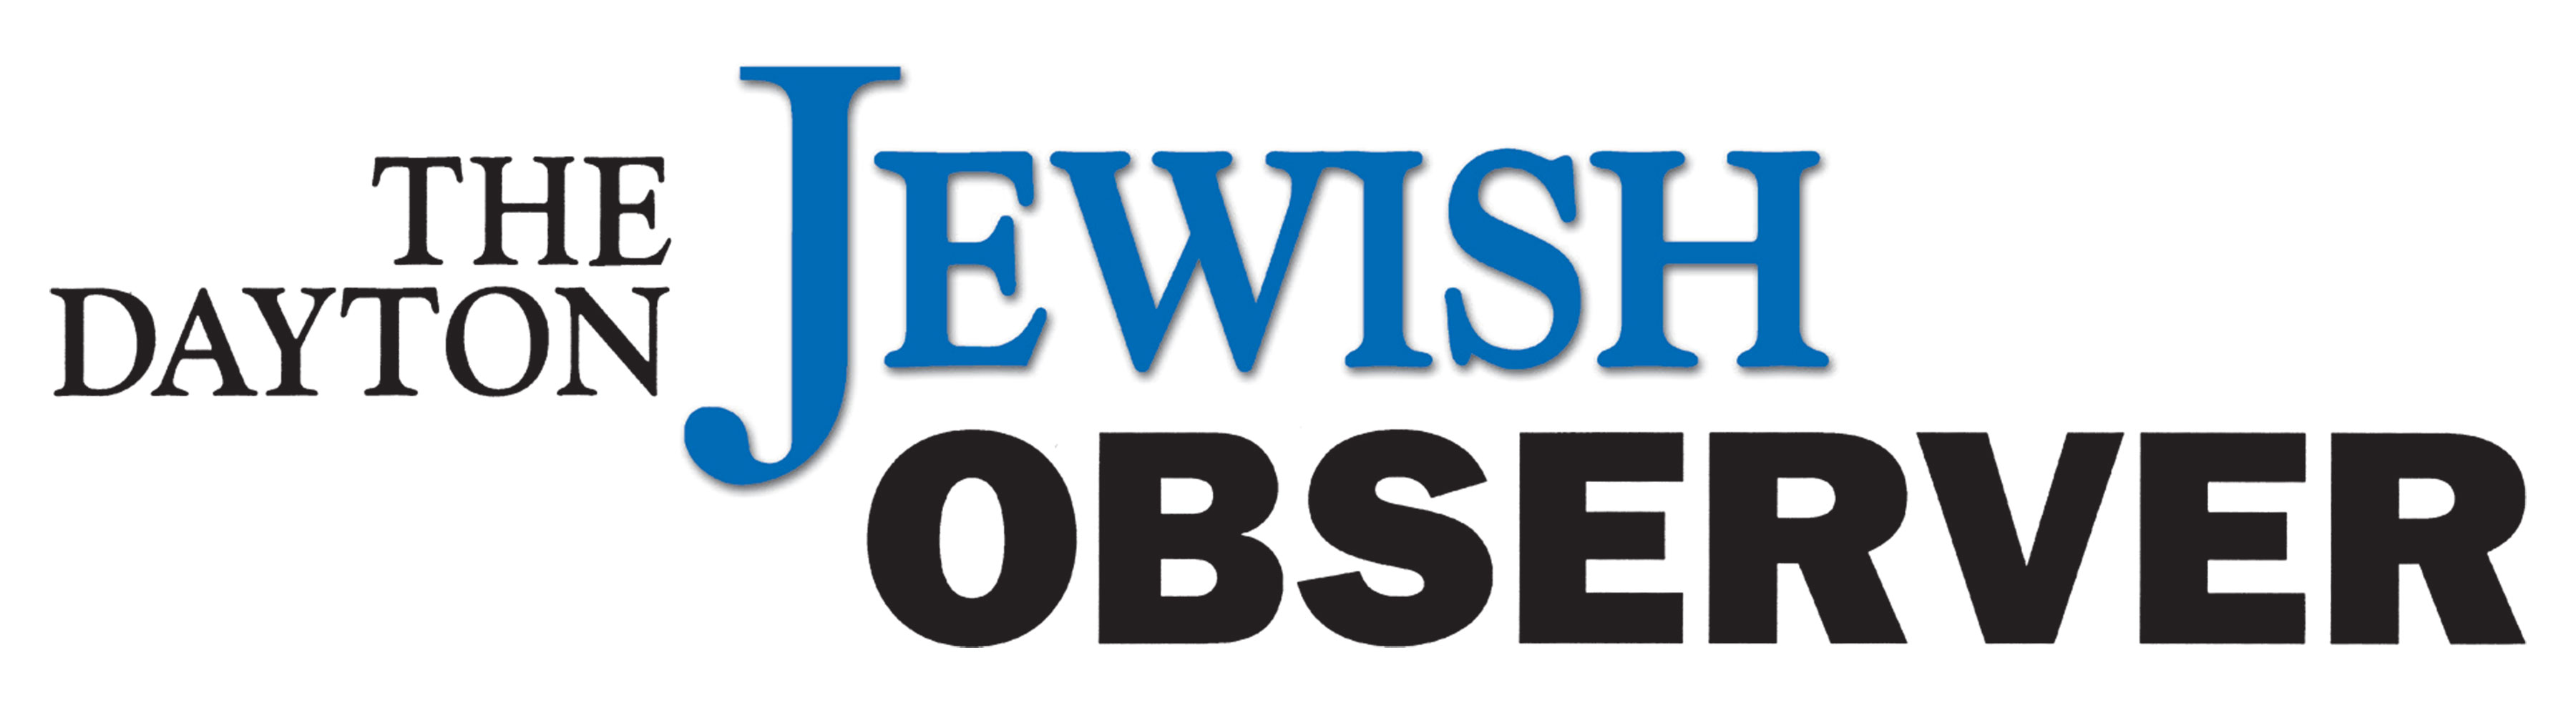 The Dayton Jewish Observer